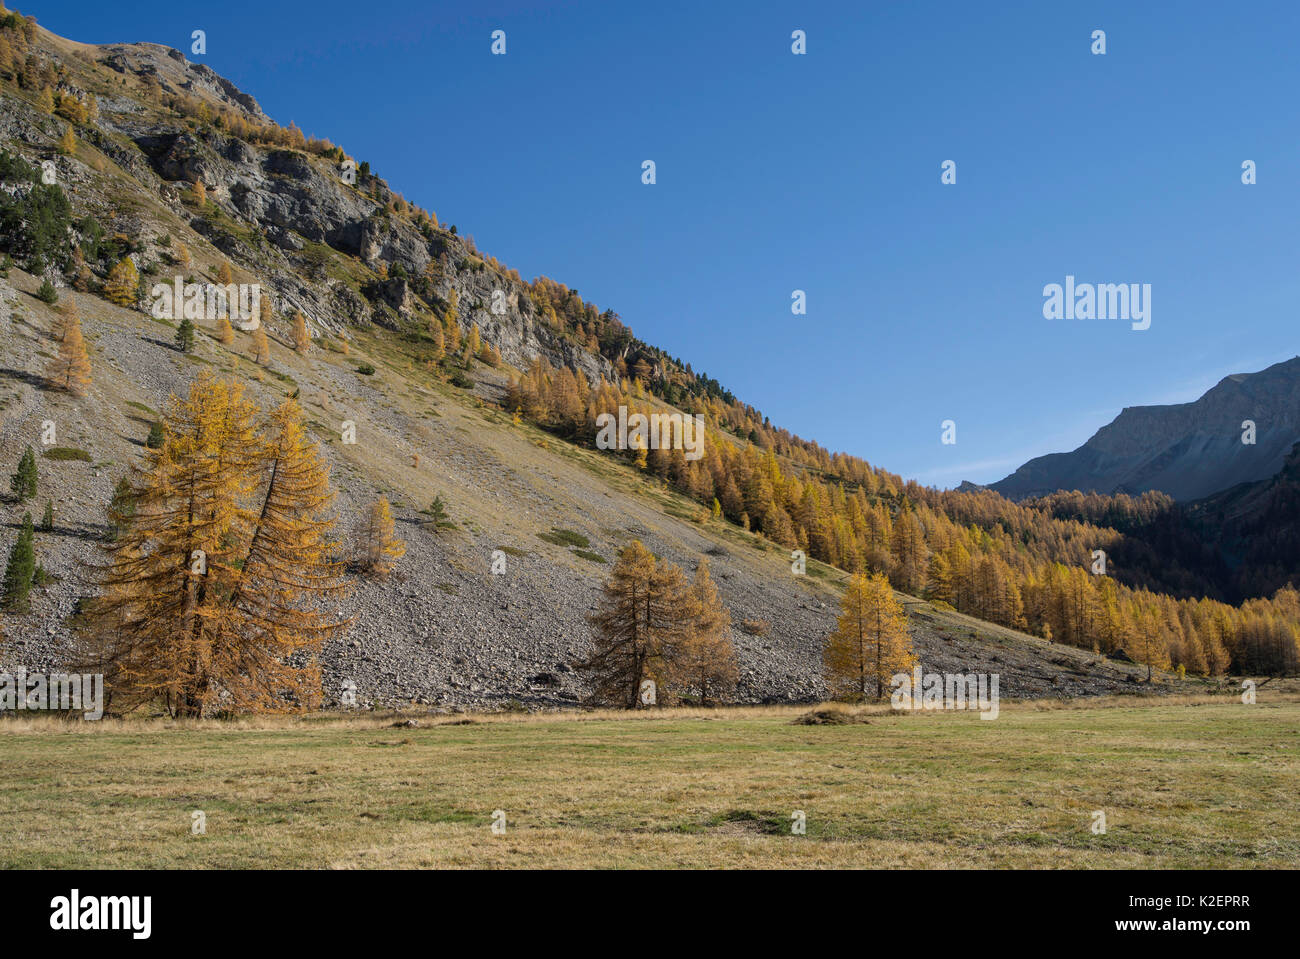 Larch (Larix sp) trees growing on mountain slope in autumn, Queyras Regional Park, Hautes-Alpes, France, November 2014. Stock Photo